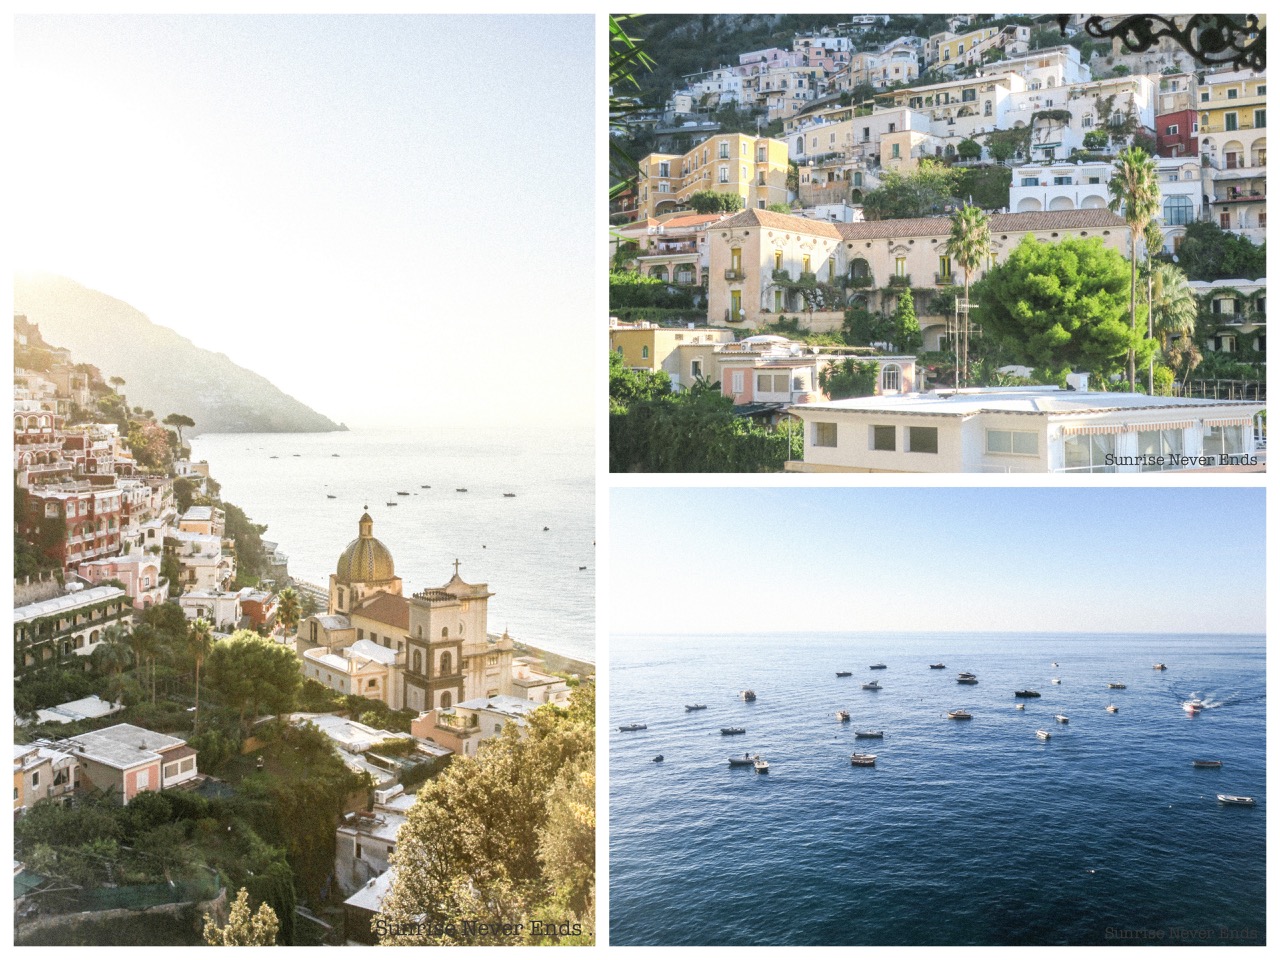 positano,italie,aliceetfantometteontheboat,anitalianboattrip,travel,travel blogger,travel guide,cote amalfitaine